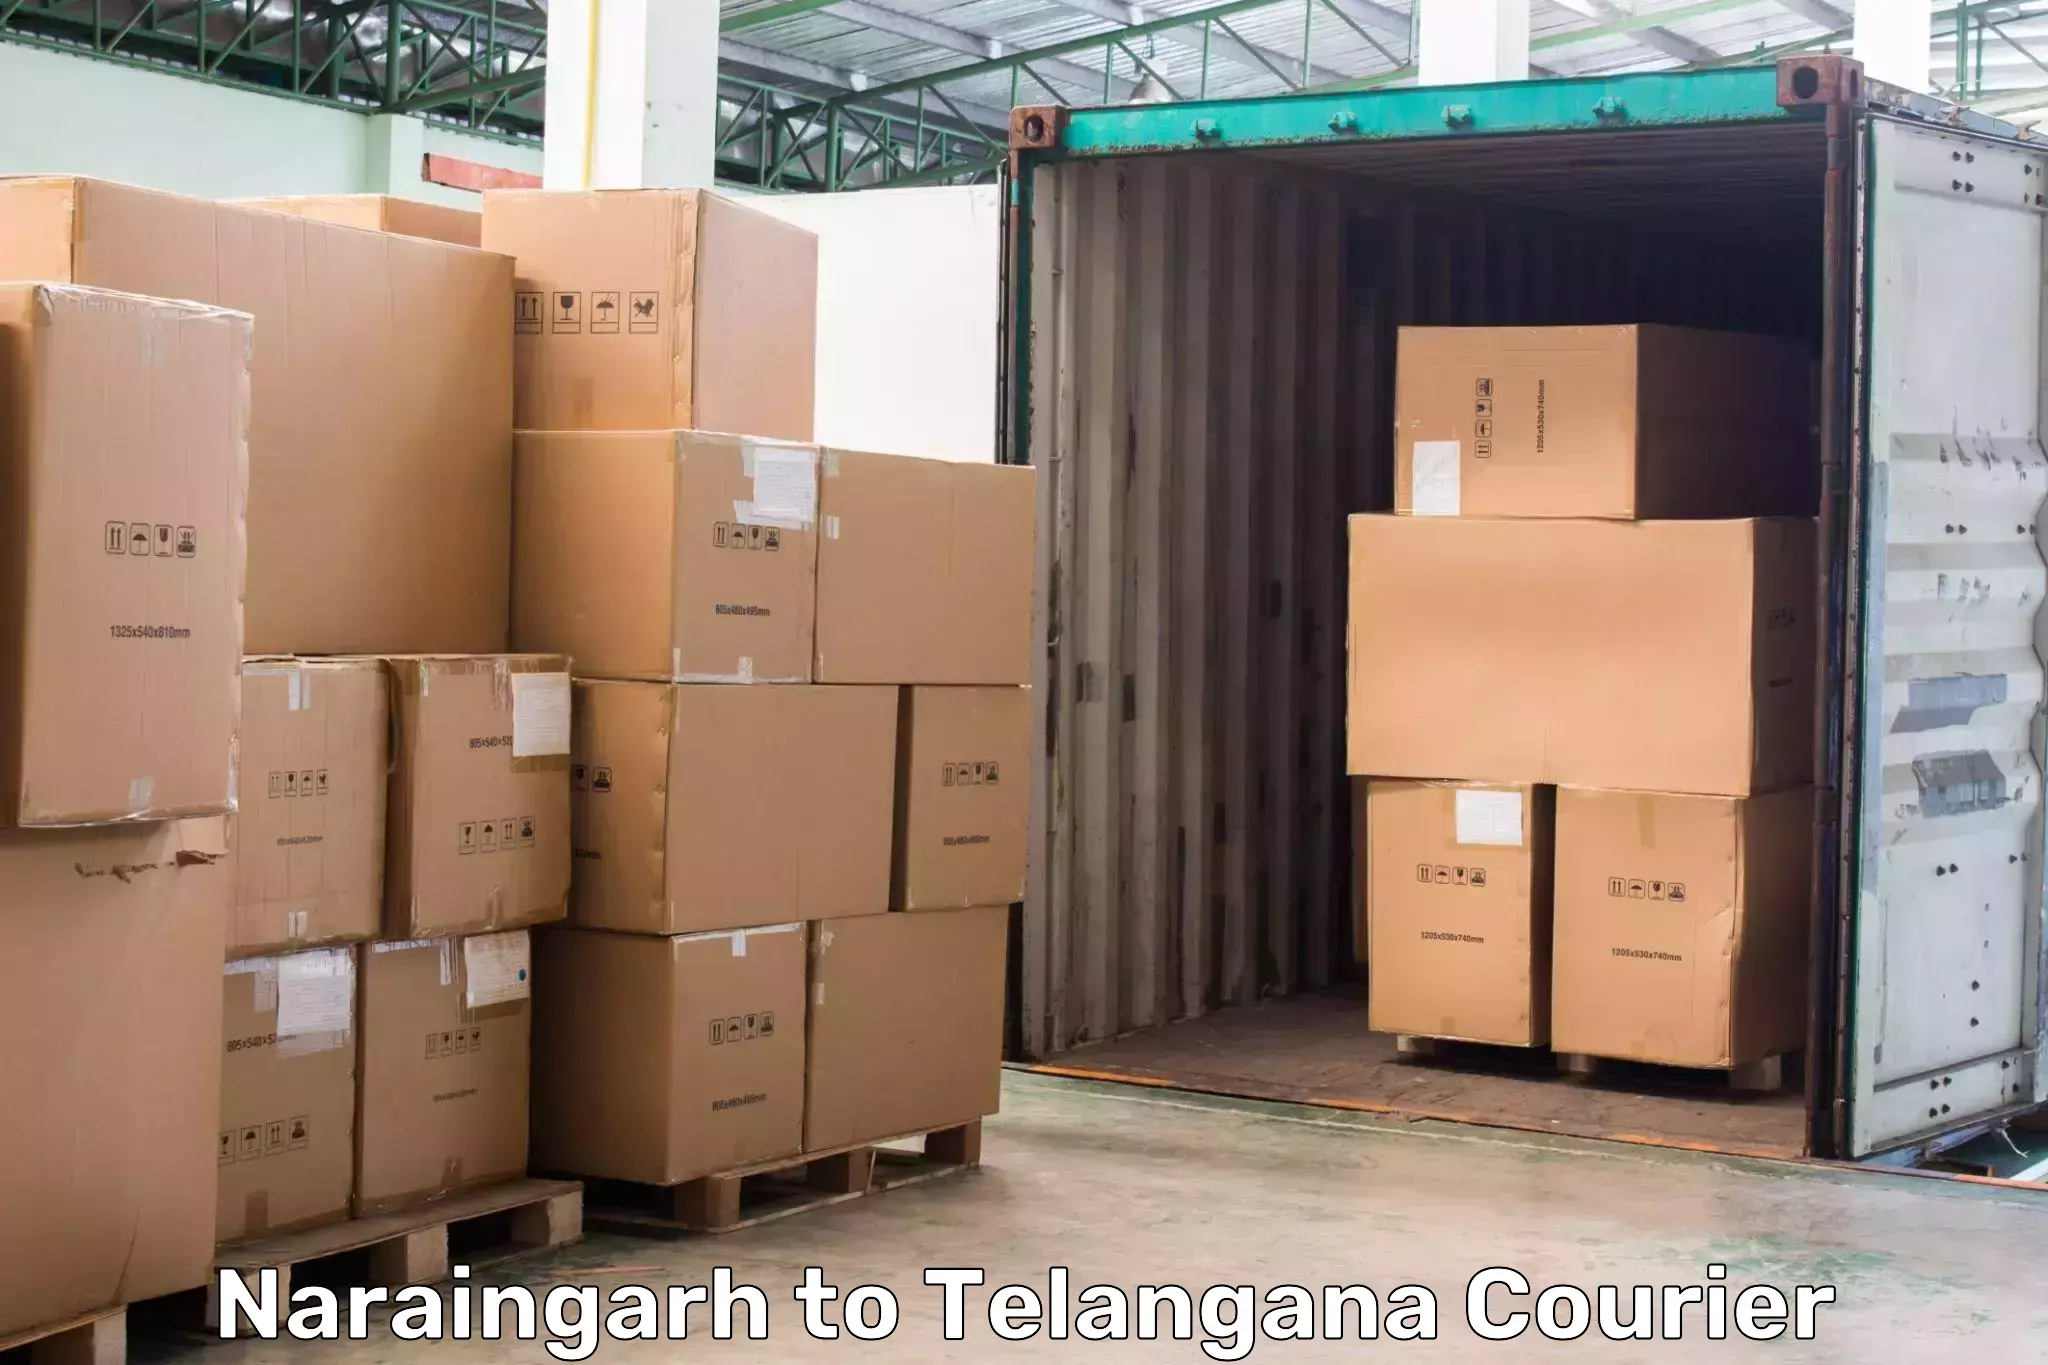 Tech-enabled shipping Naraingarh to Amangal